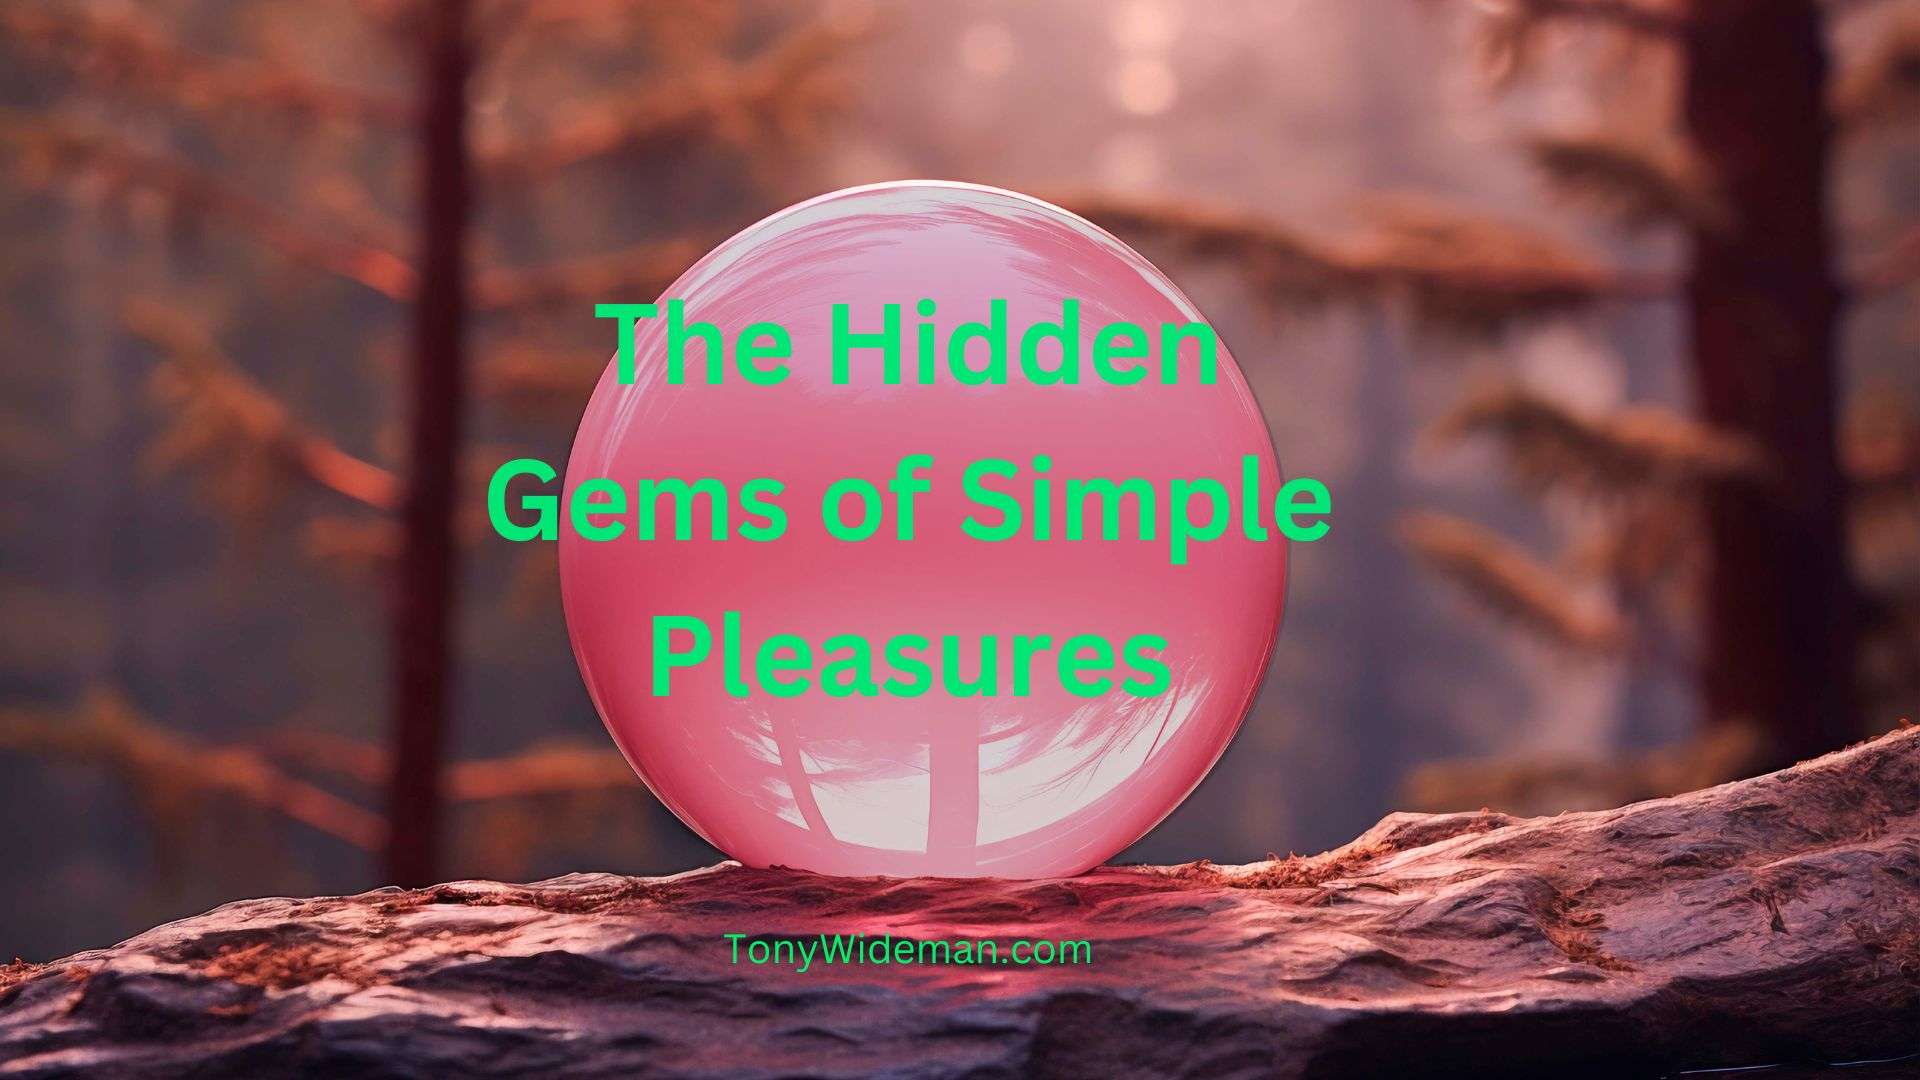 The Hidden Gems of Simple Pleasures